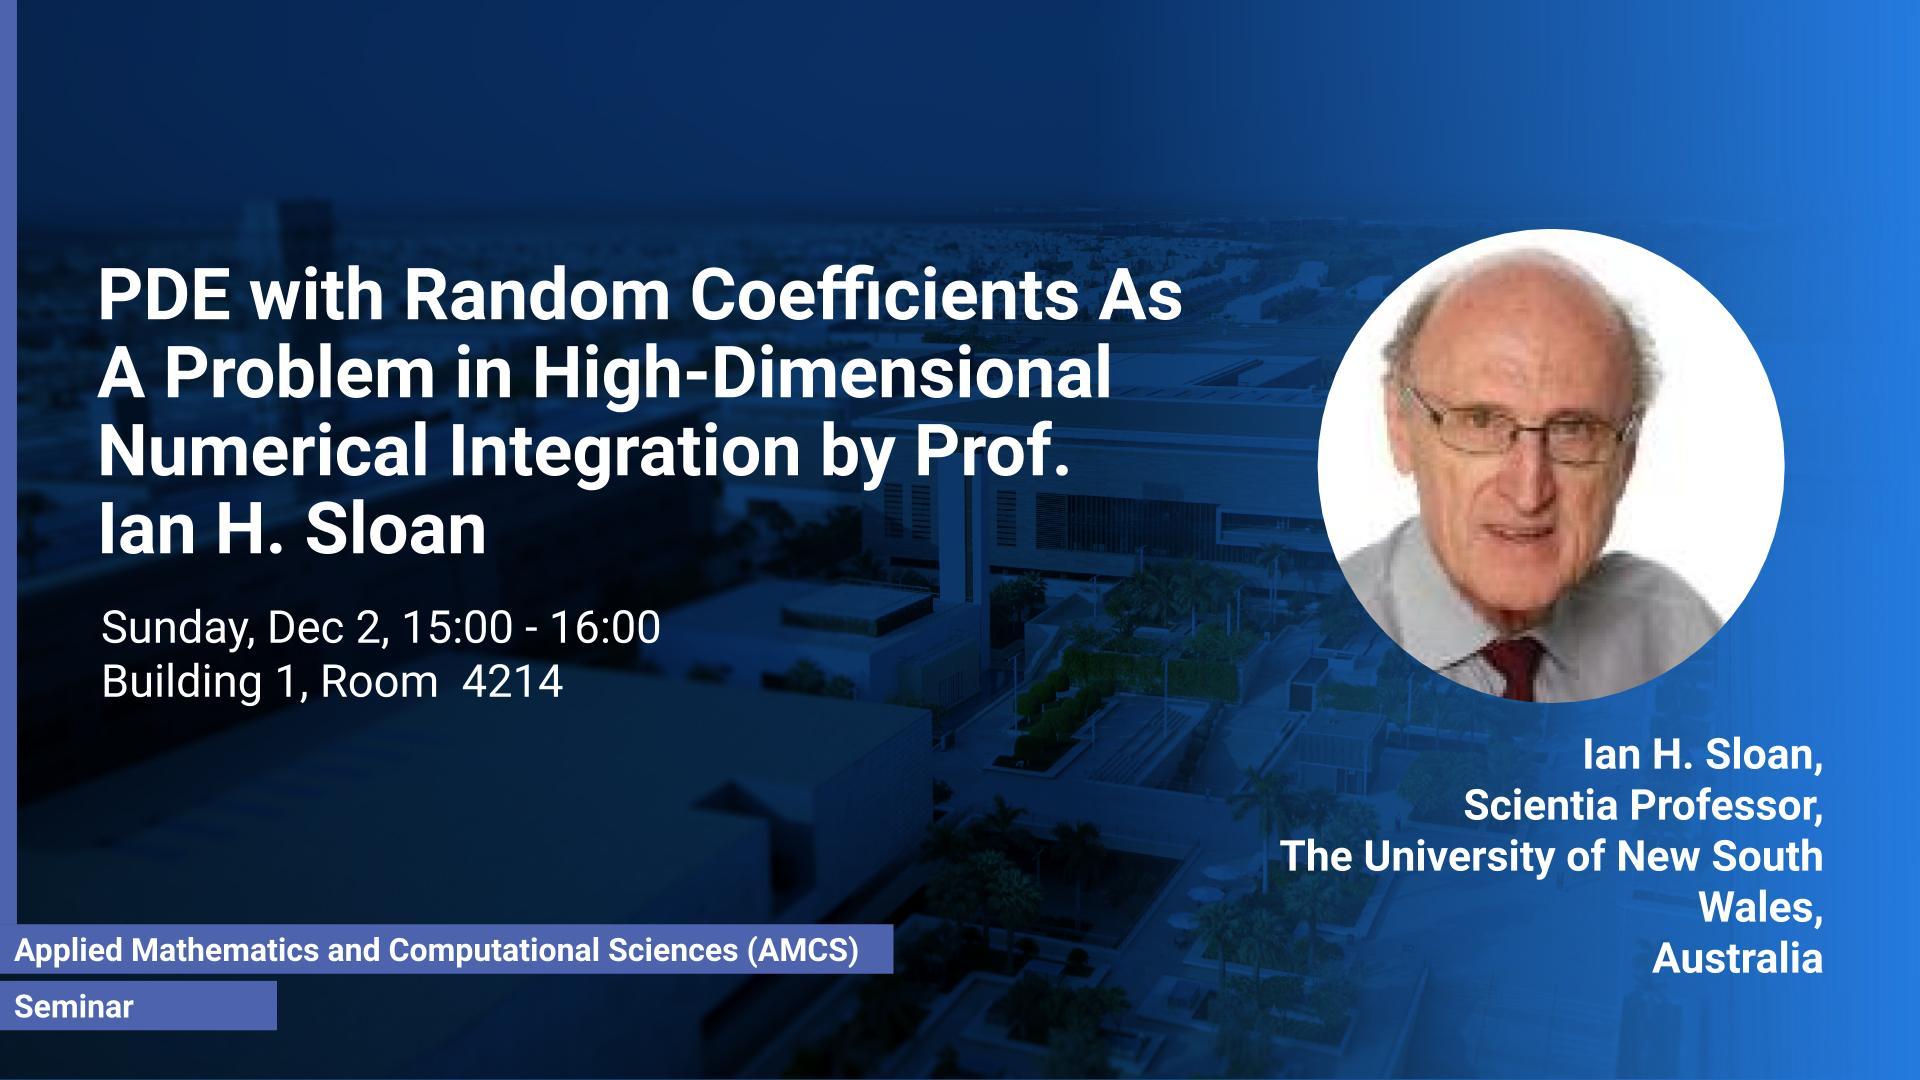 KAUST CEMSE AMCS STOCHNUM Seminar Ian H Sloan PDE With Random Coefficients